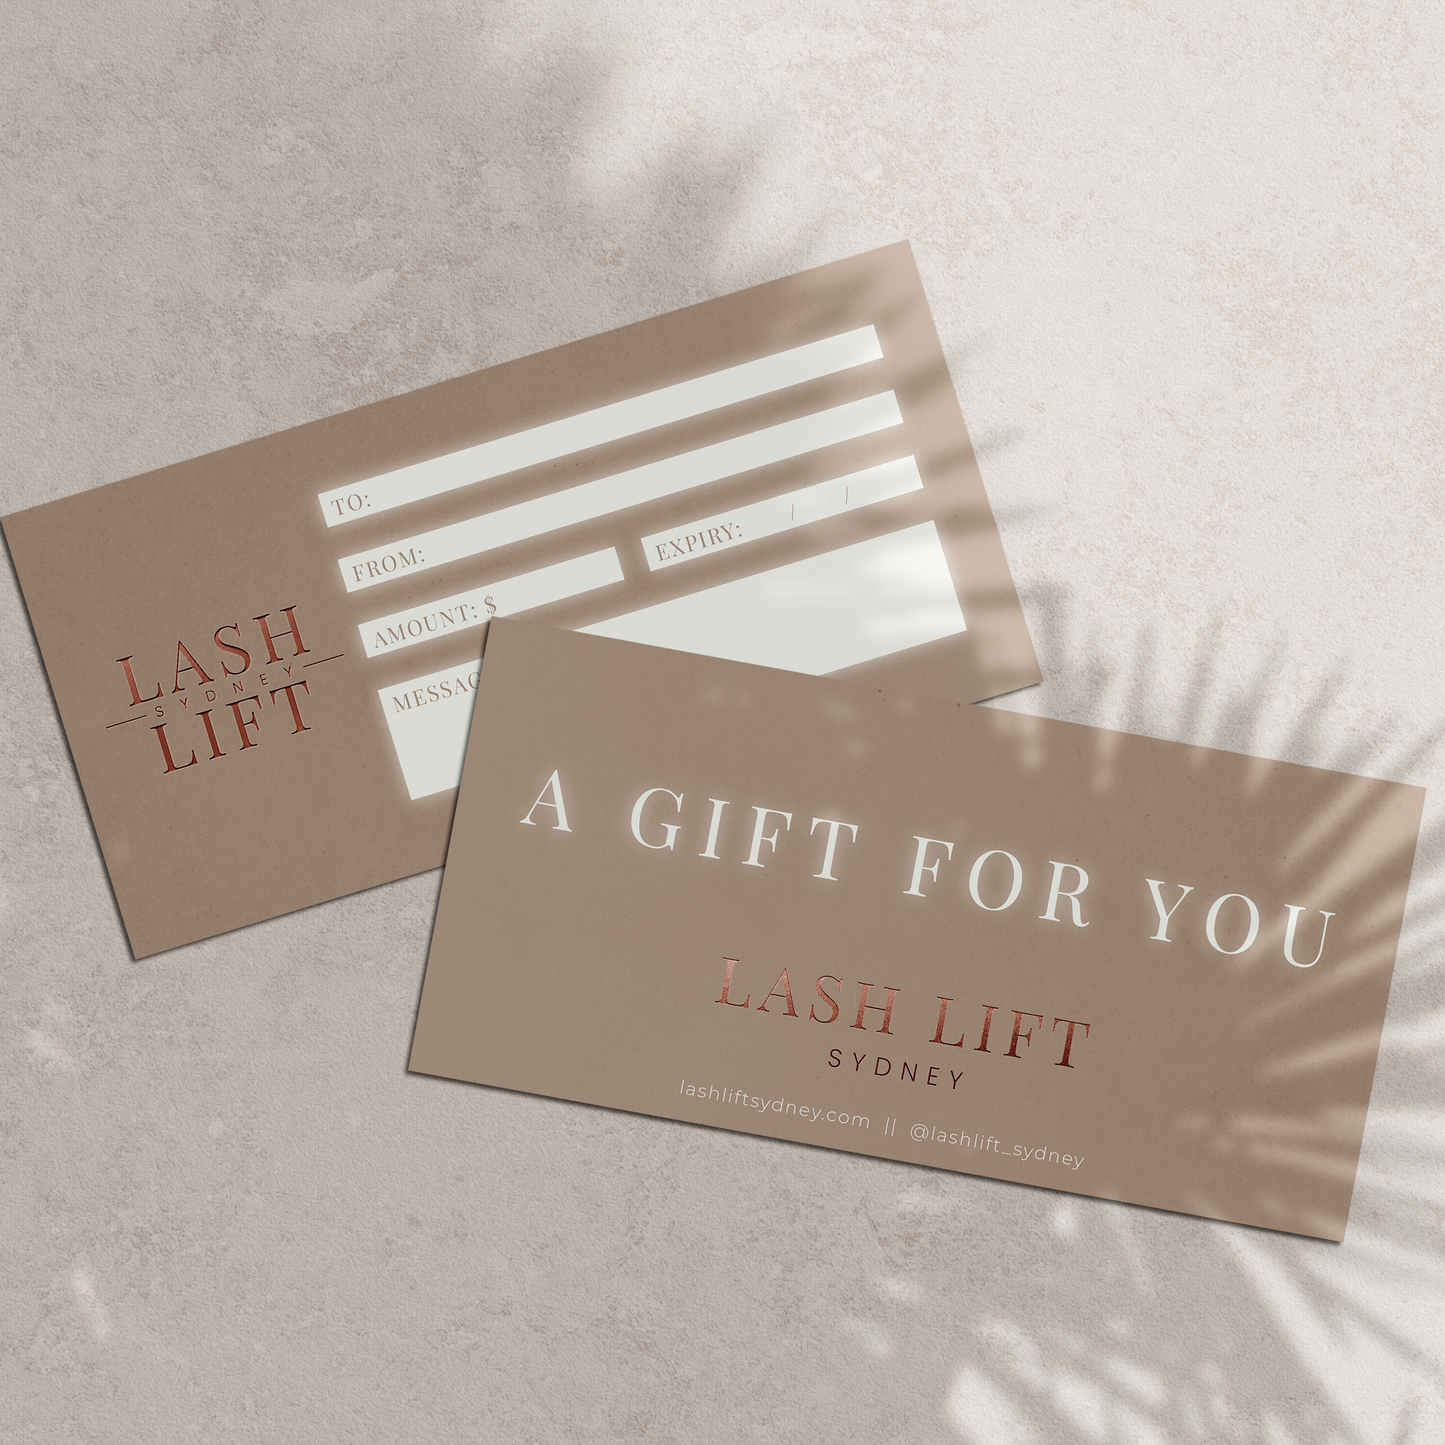 Lash Lift Sydney Gift Card